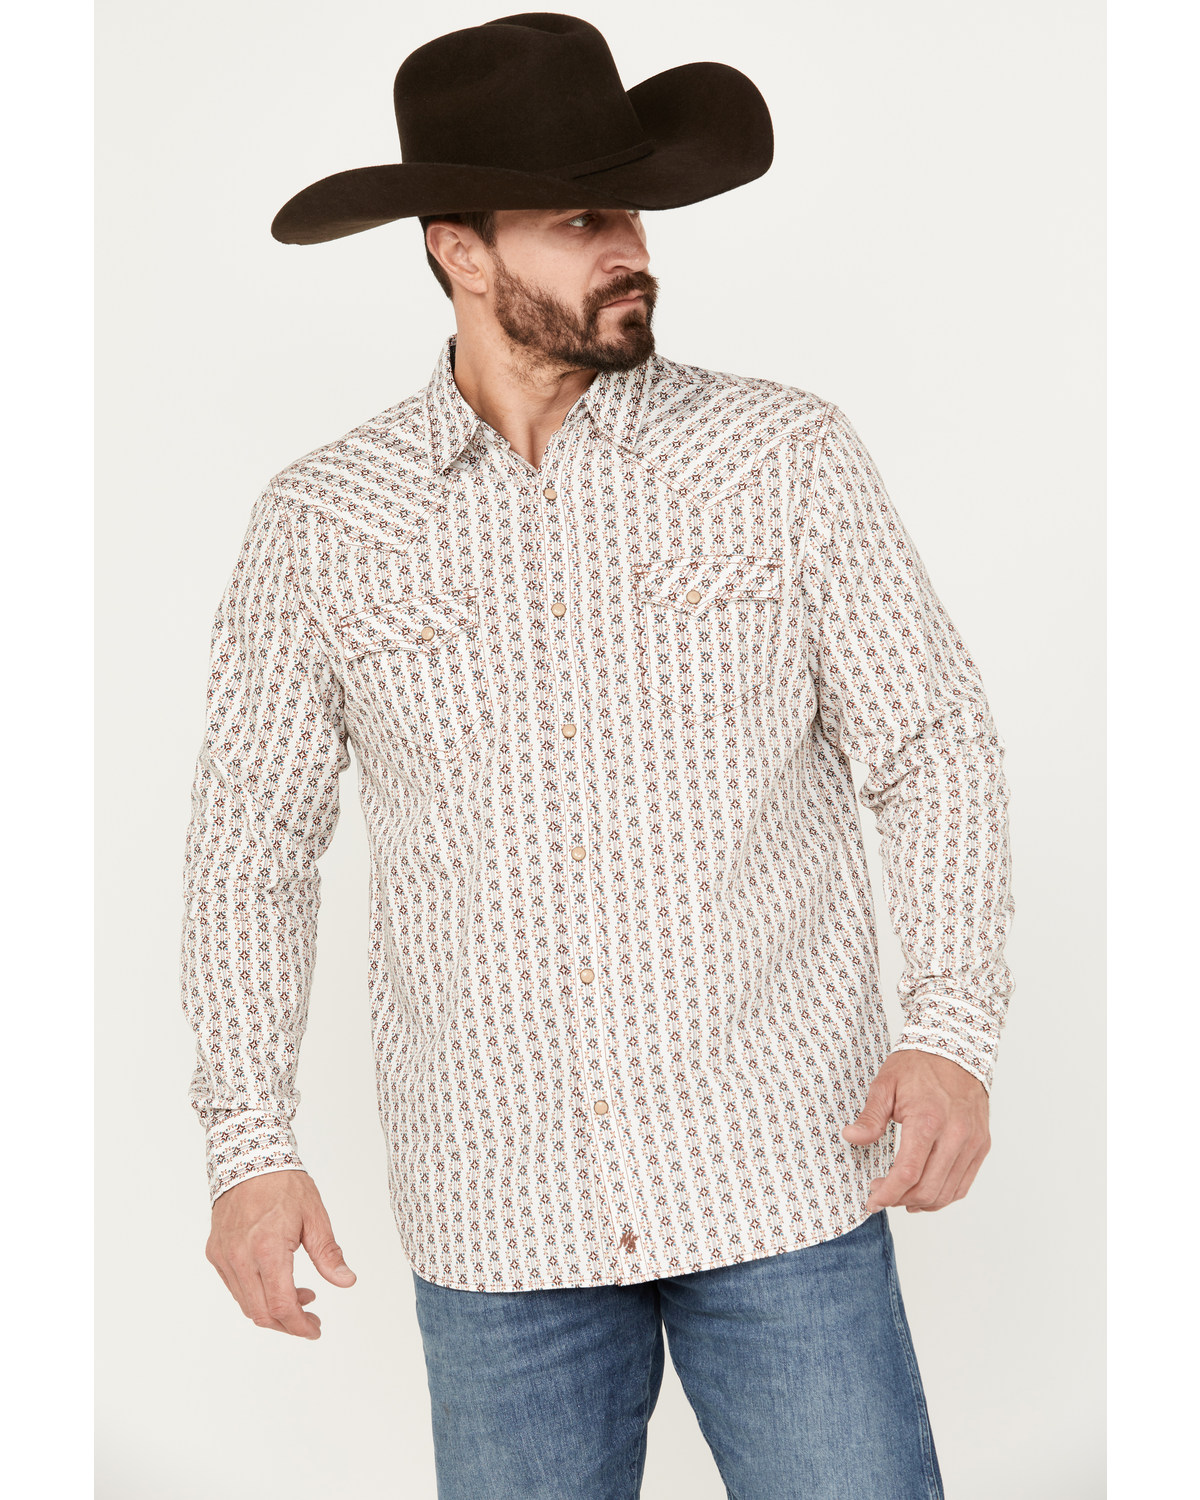 Moonshine Spirit Men's Shin Dig Southwestern Long Sleeve Western Pearl Snap Shirt